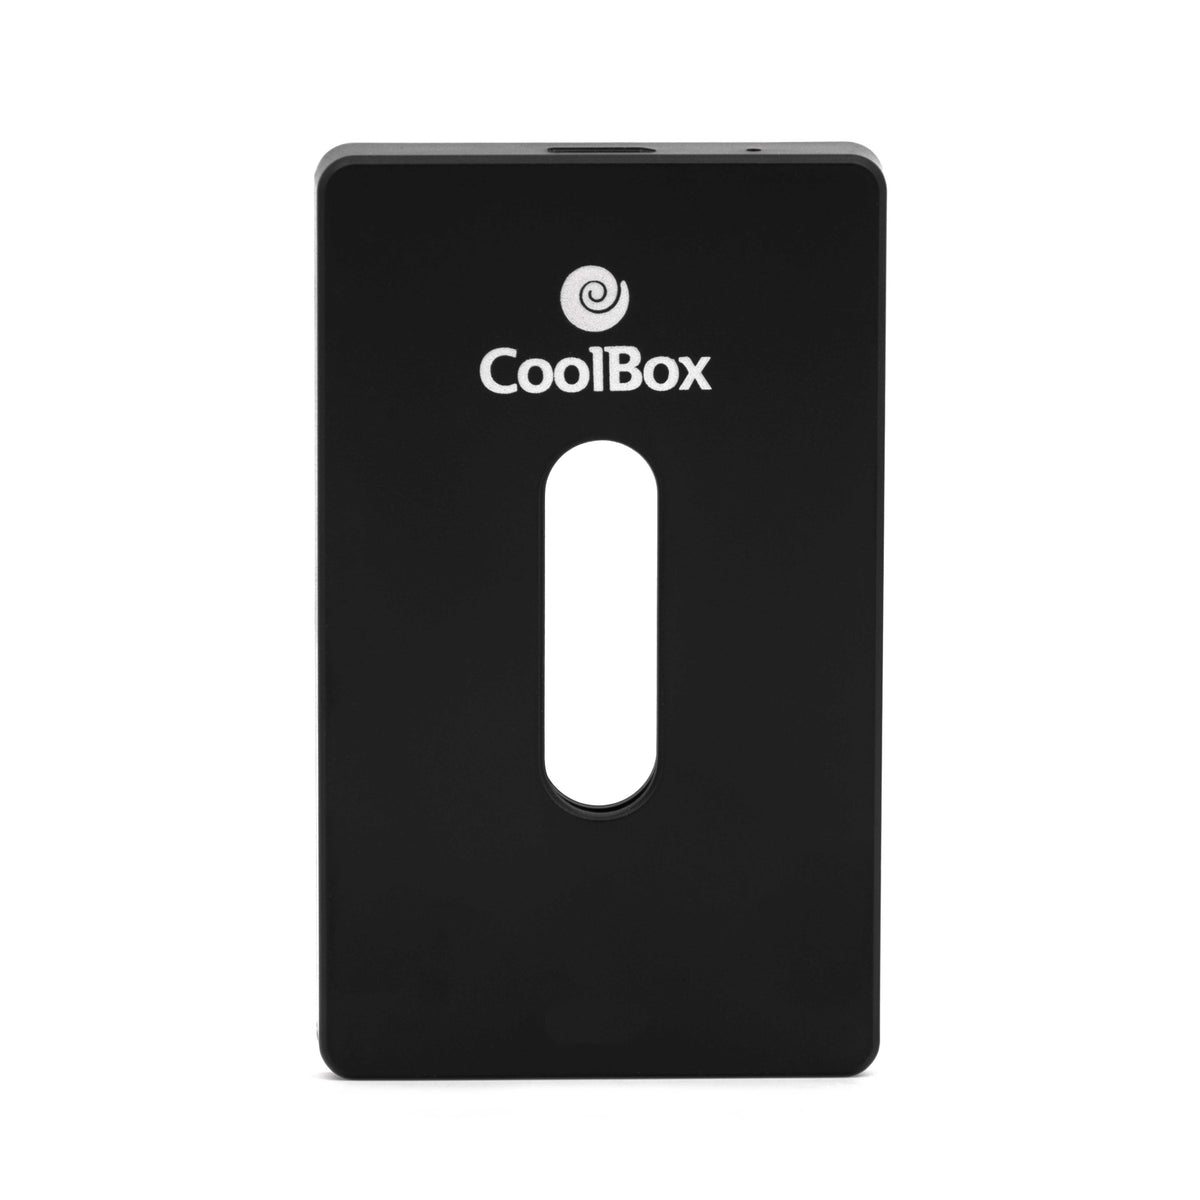 Caixa p/ disco externo 2.5 7mm CoolBox S-2533  SLOT-IN USB 3.0 Black